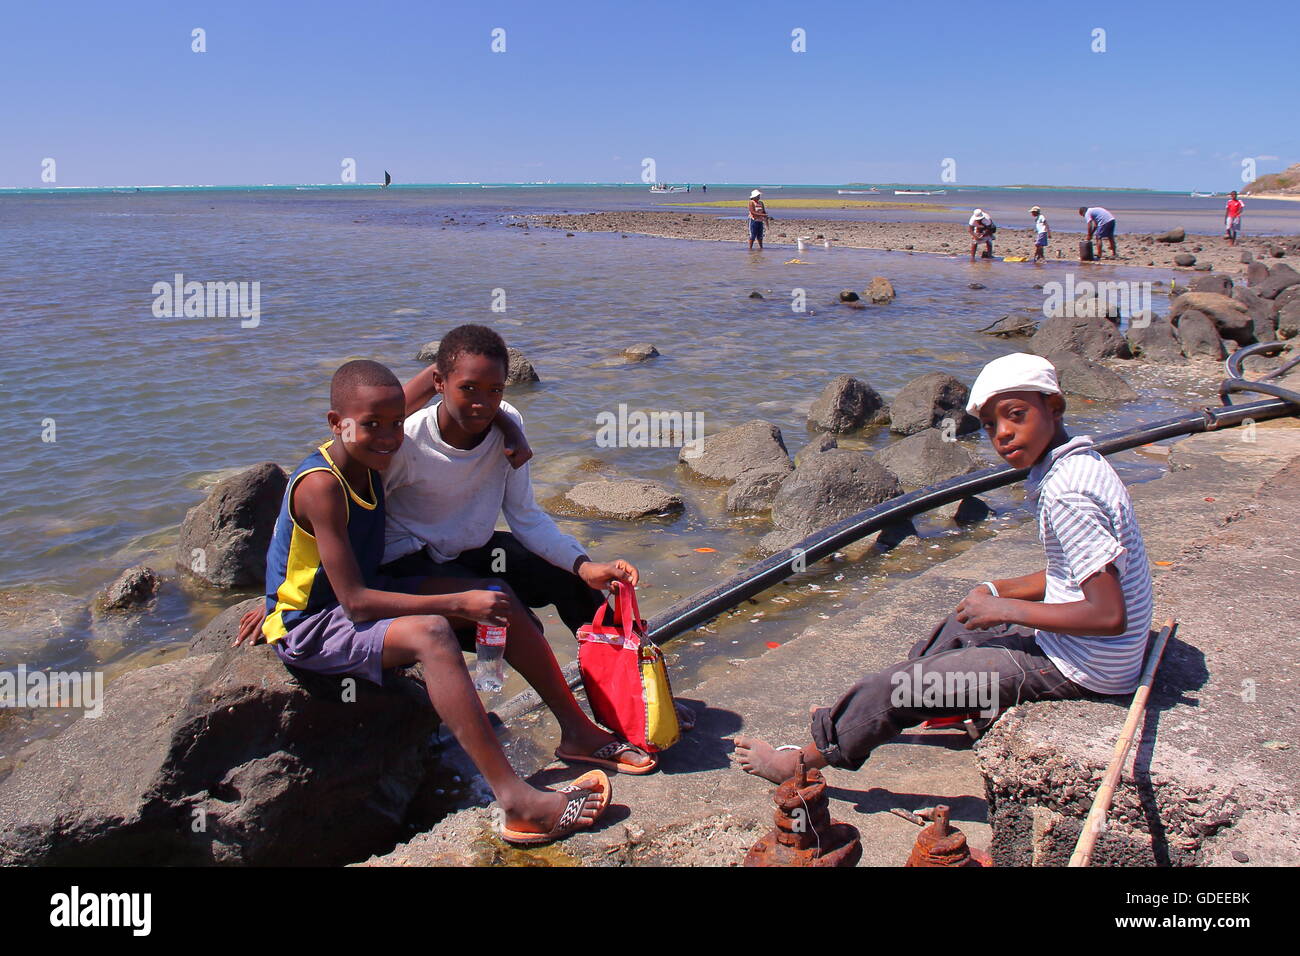 https://c8.alamy.com/comp/GDEEBK/octopus-fishing-three-local-boys-posing-rodrigues-island-mauritius-GDEEBK.jpg